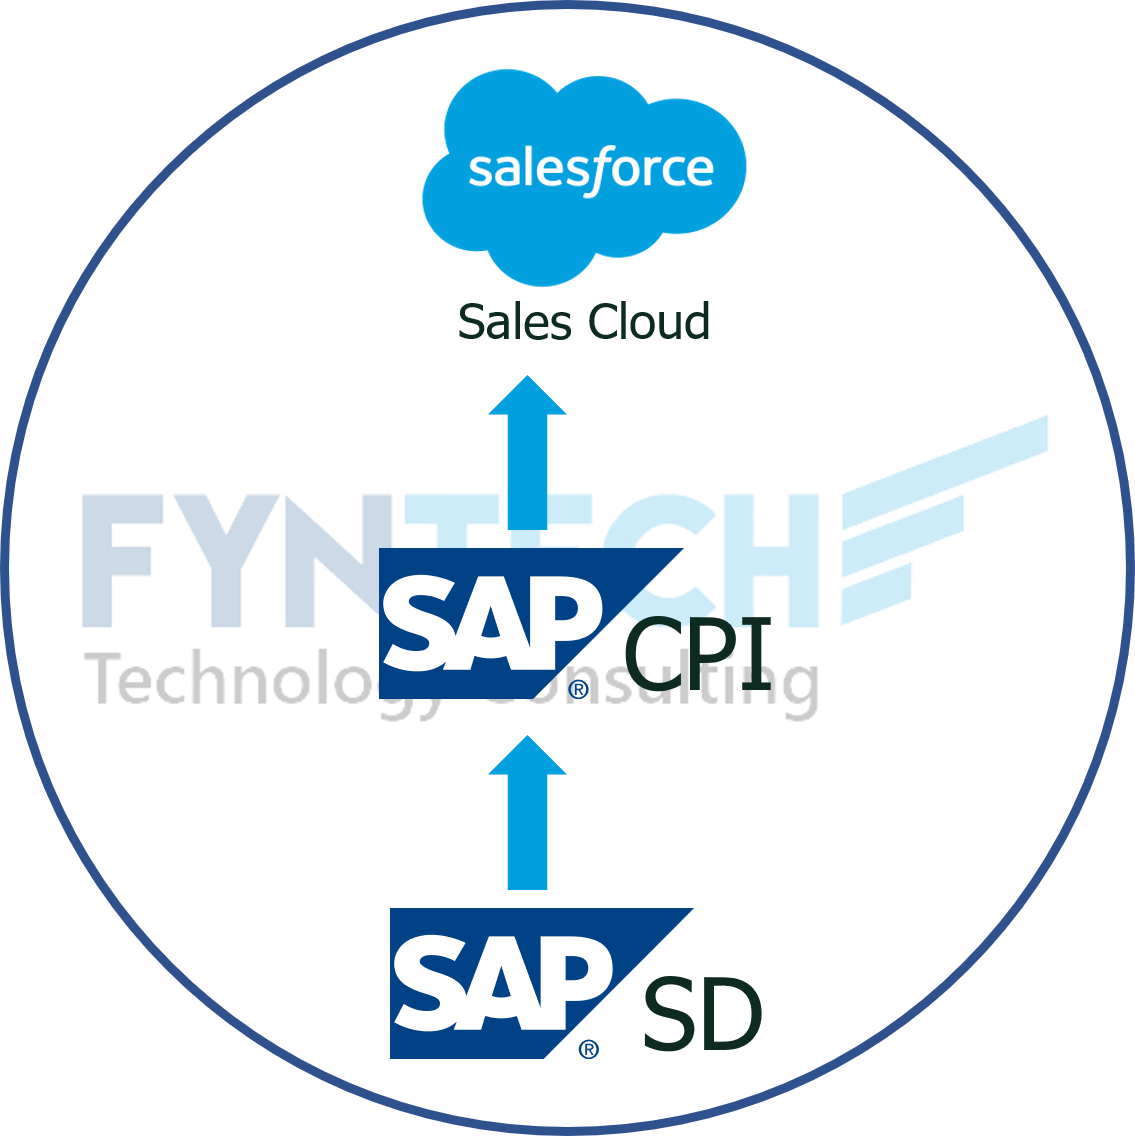 Referenz SAP Salesforce Integration SAP SD SAP CPI Sales Cloud